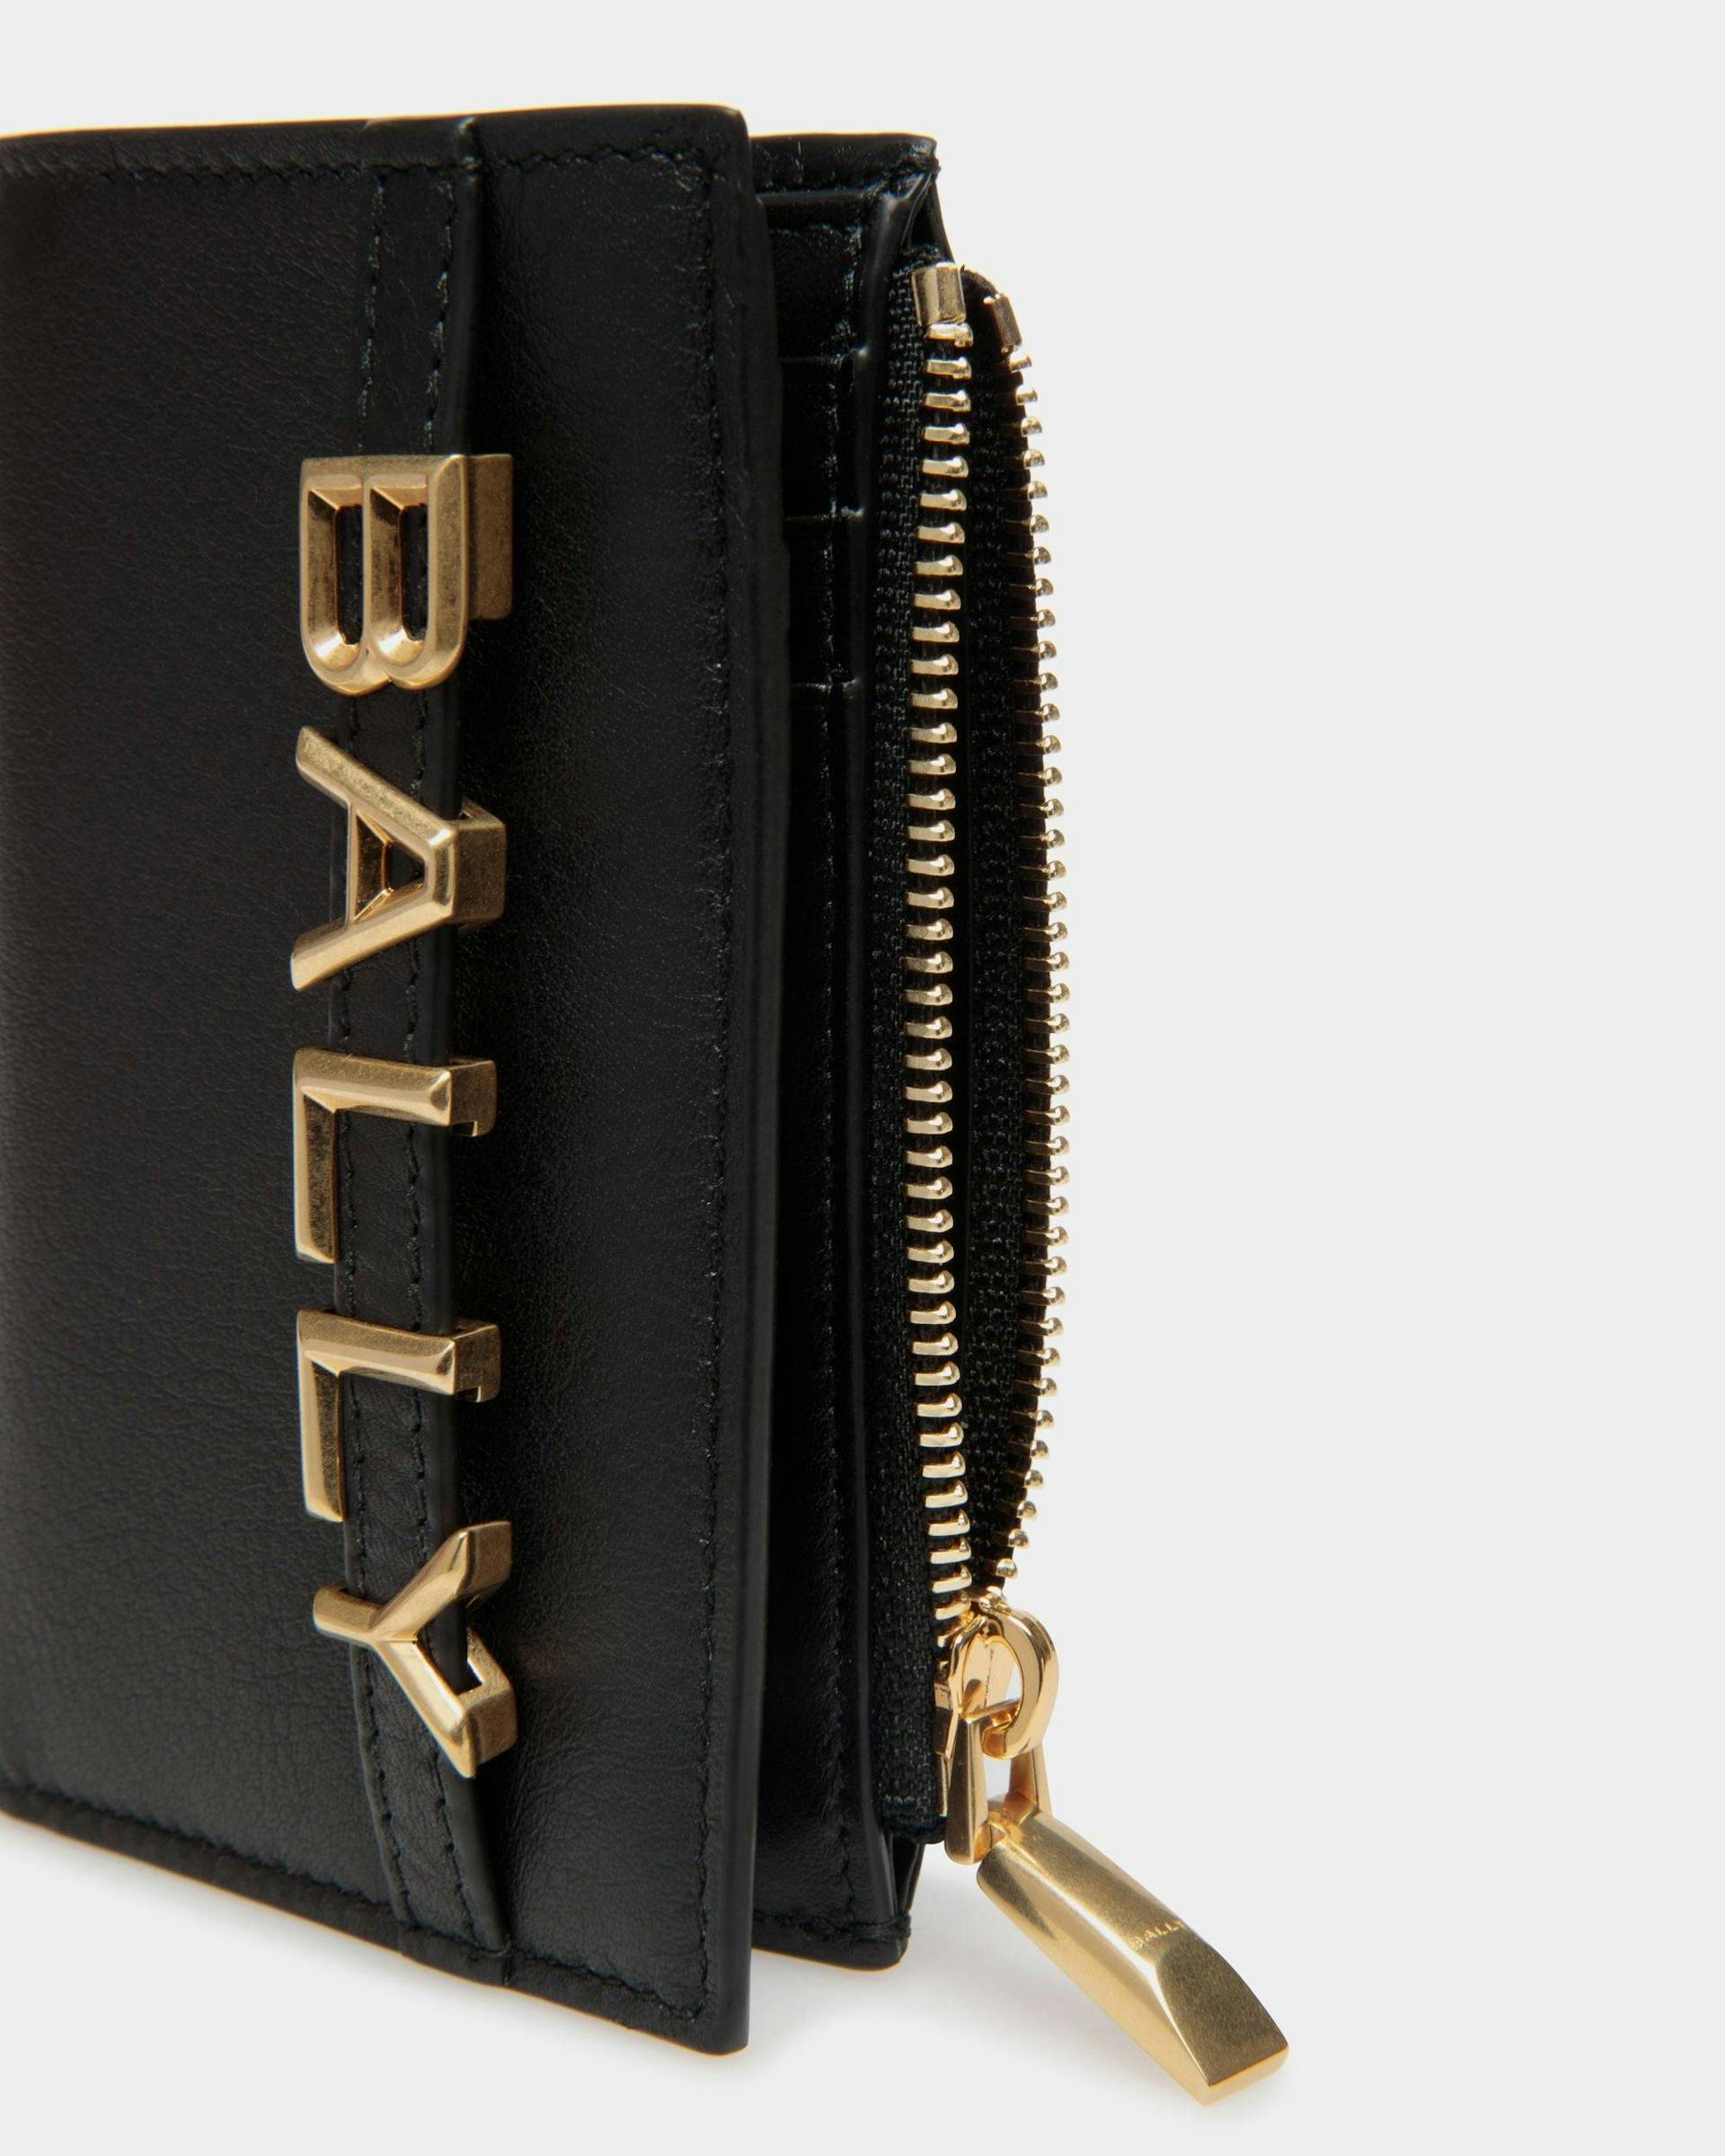 Women's Bally Spell Wallet in Black Leather | Bally | Still Life Detail